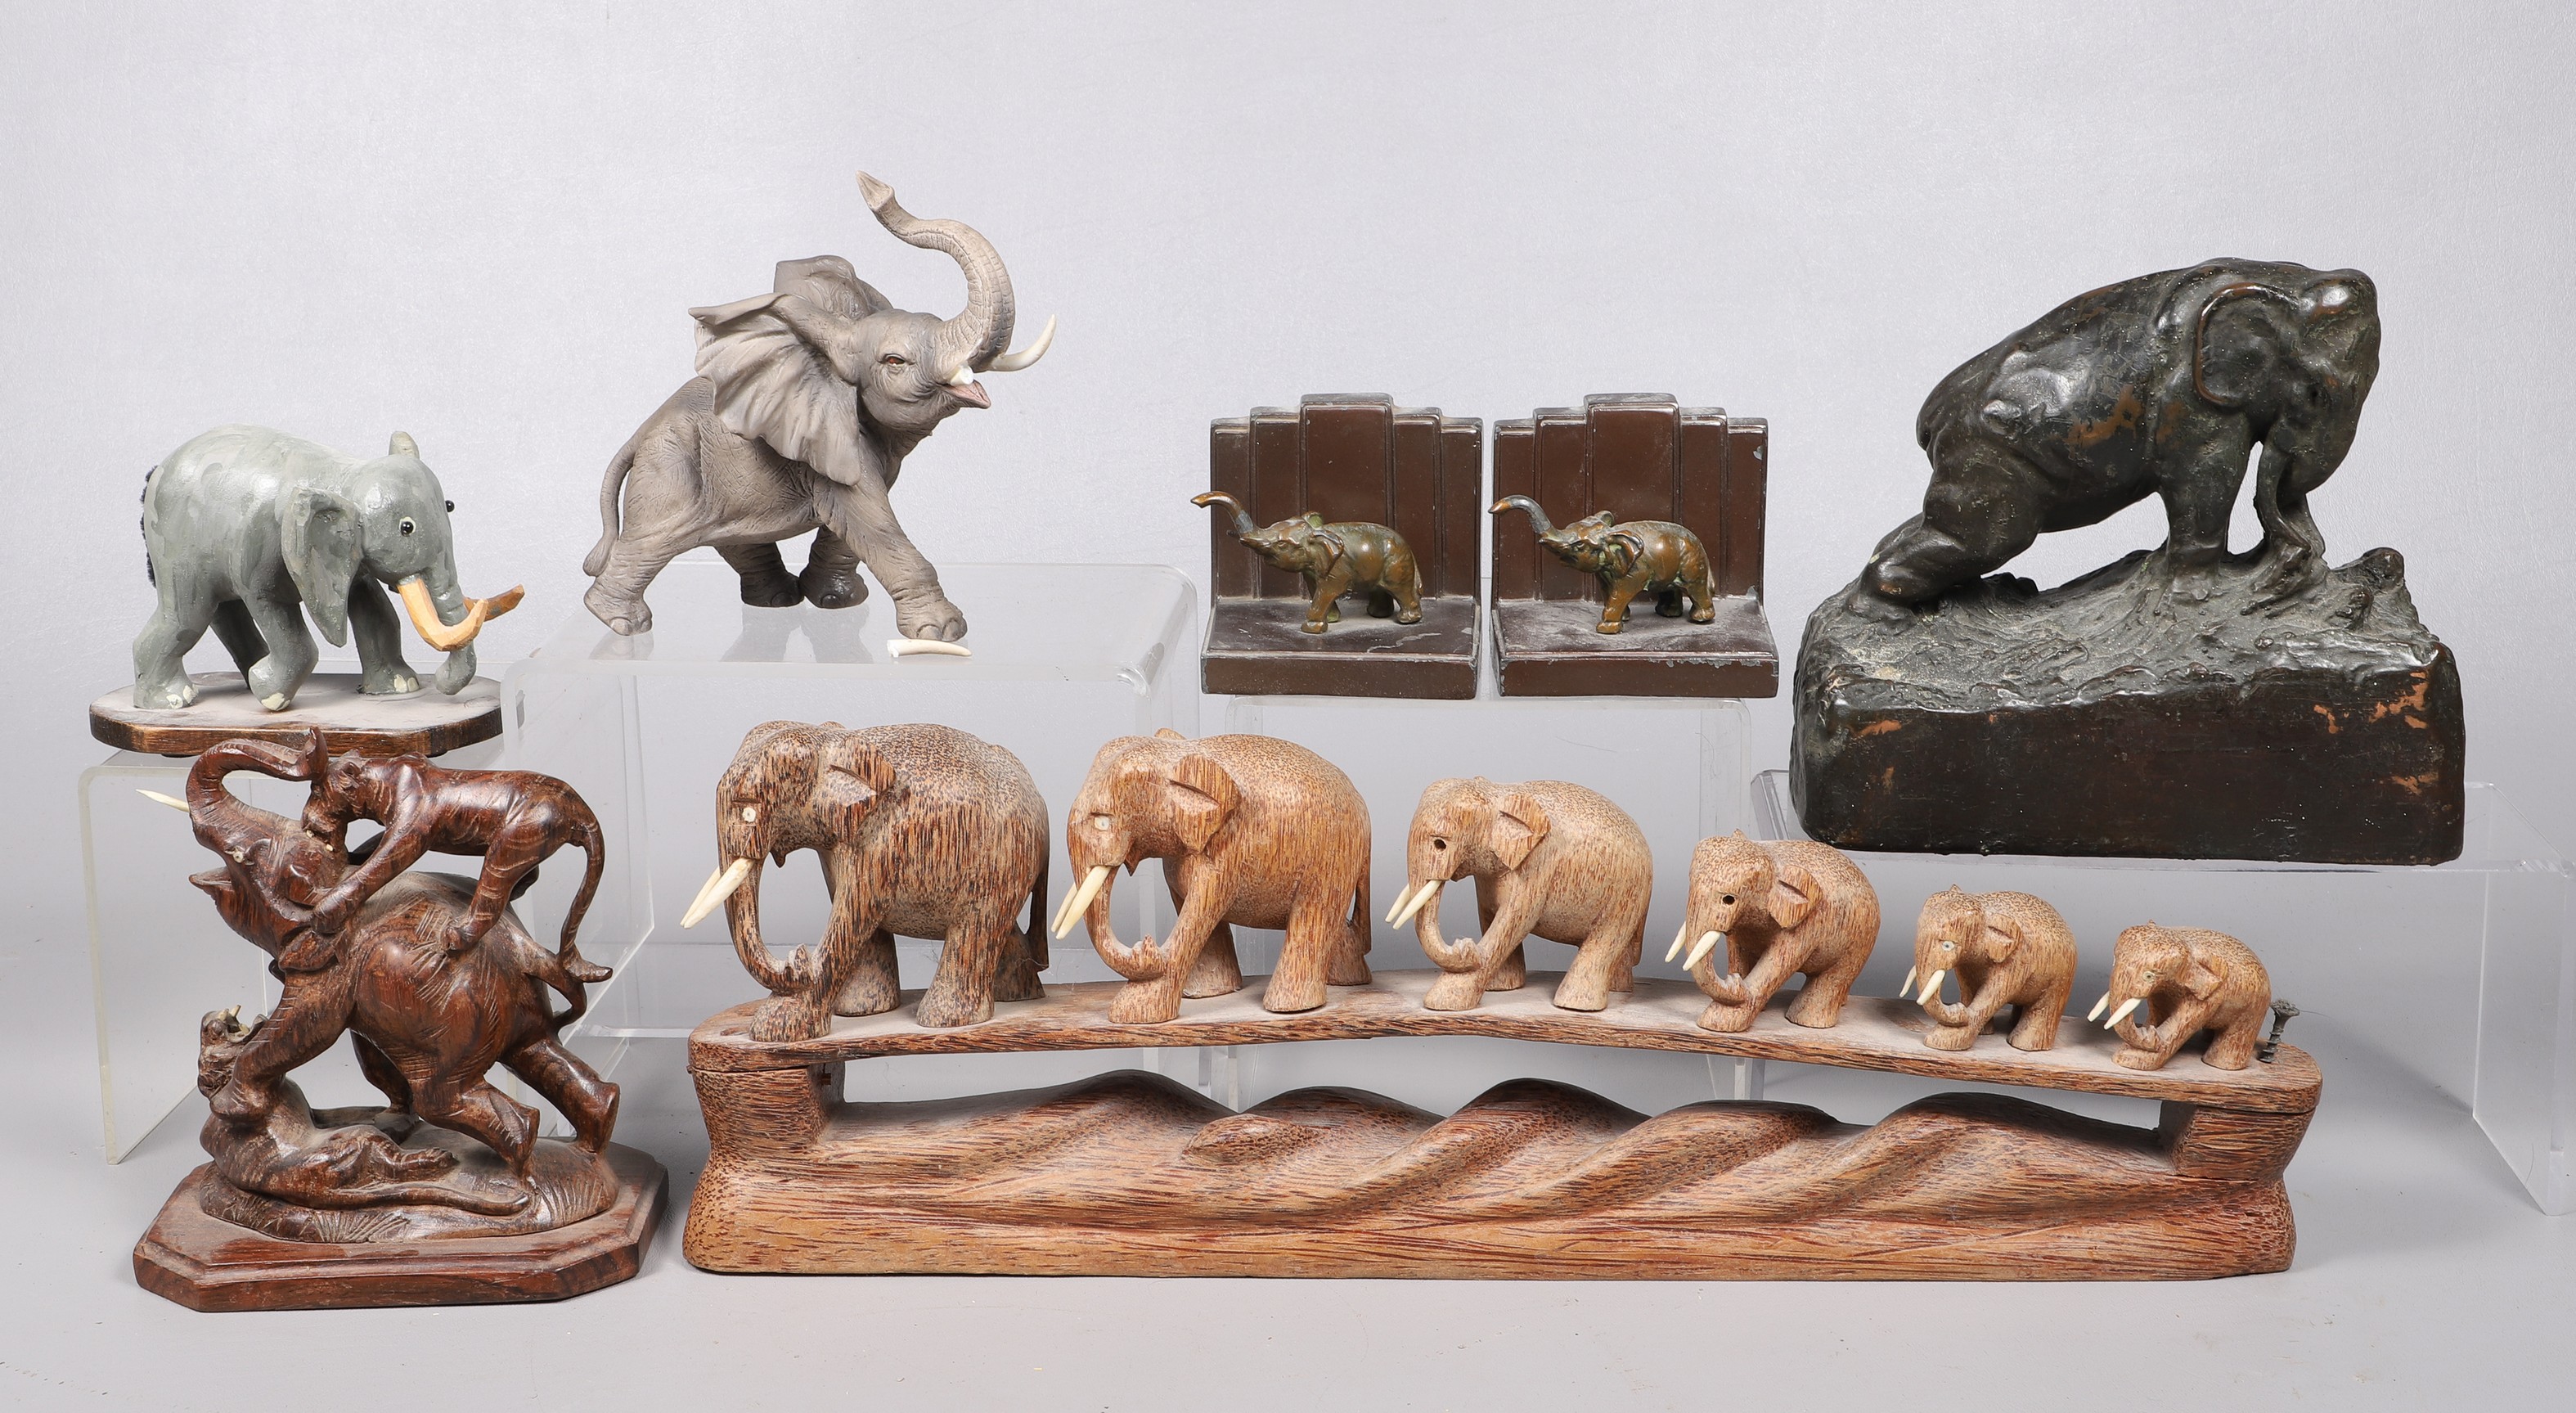 Lot of elephant figurines, including